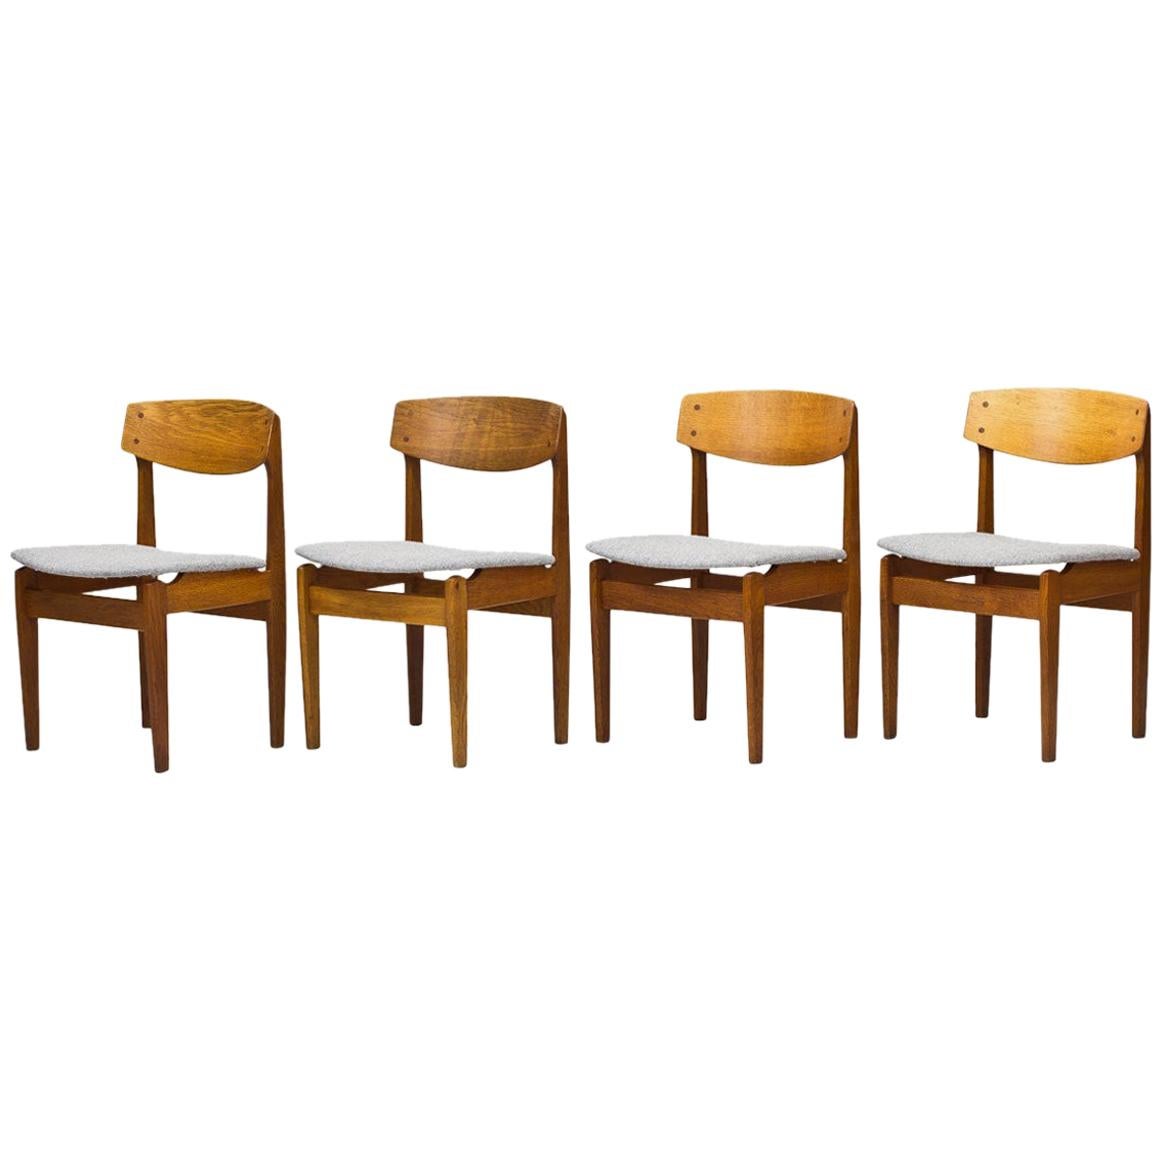 Set of 4 Danish Chairs by Jørgen Baekmark for FDB, 1950s